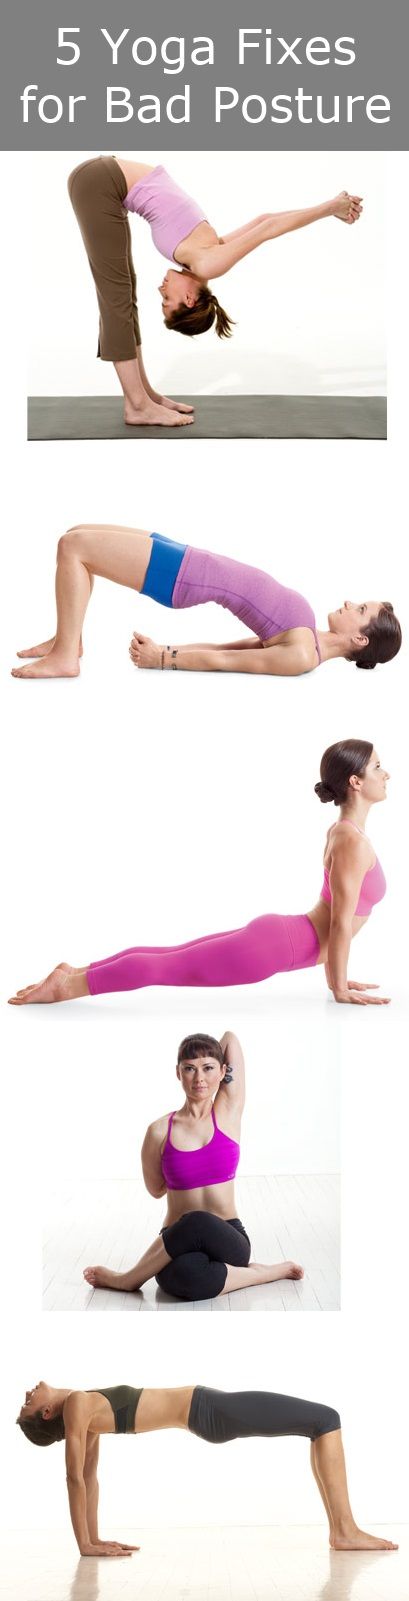 5 Yoga Fixes for Bad Posture